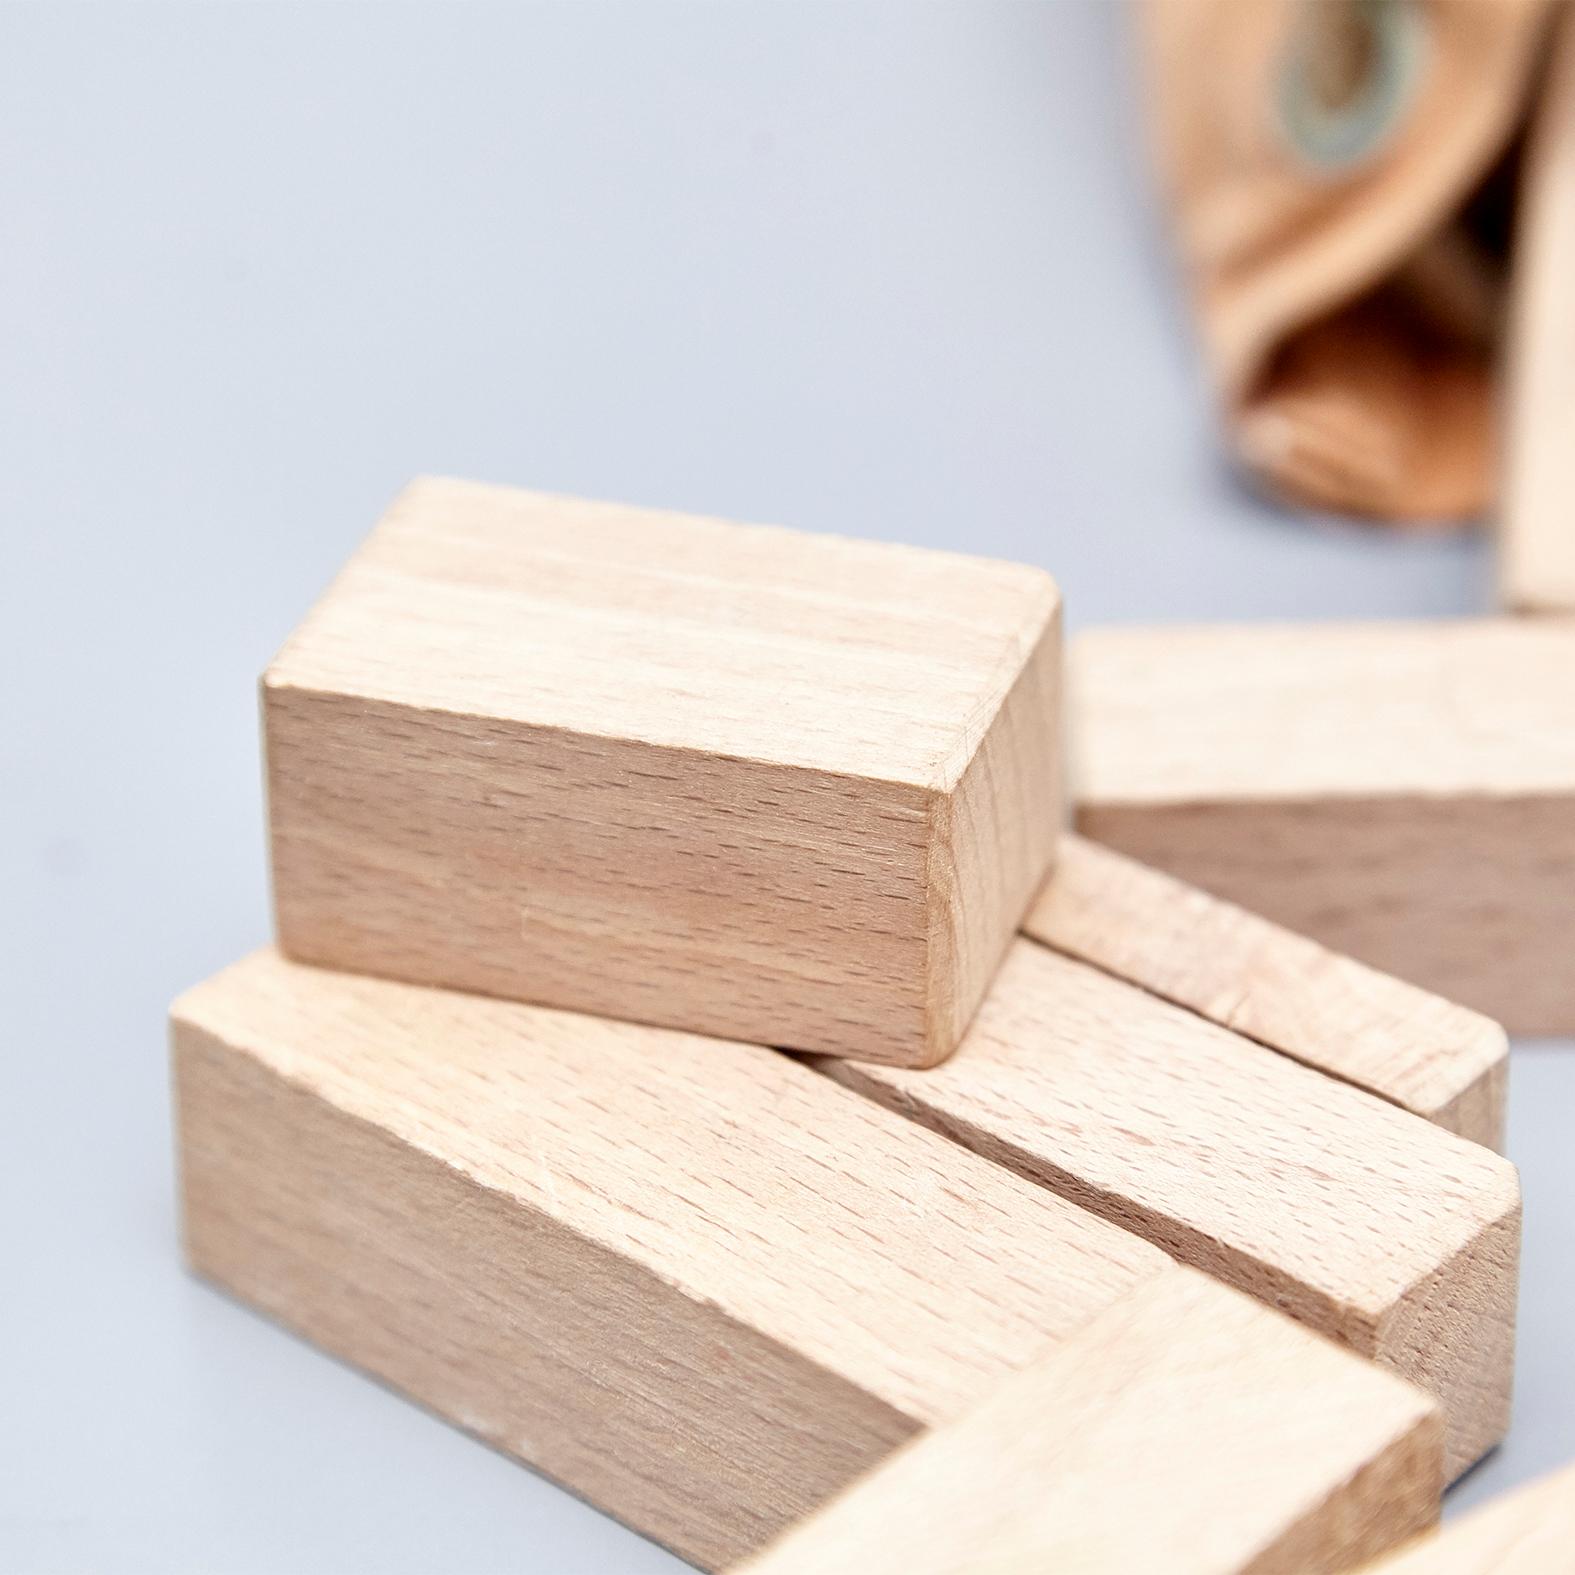 Ko Verzuu for Ado, Mid Century Modern, Wood Blocks Construction Netherlands Toy  3